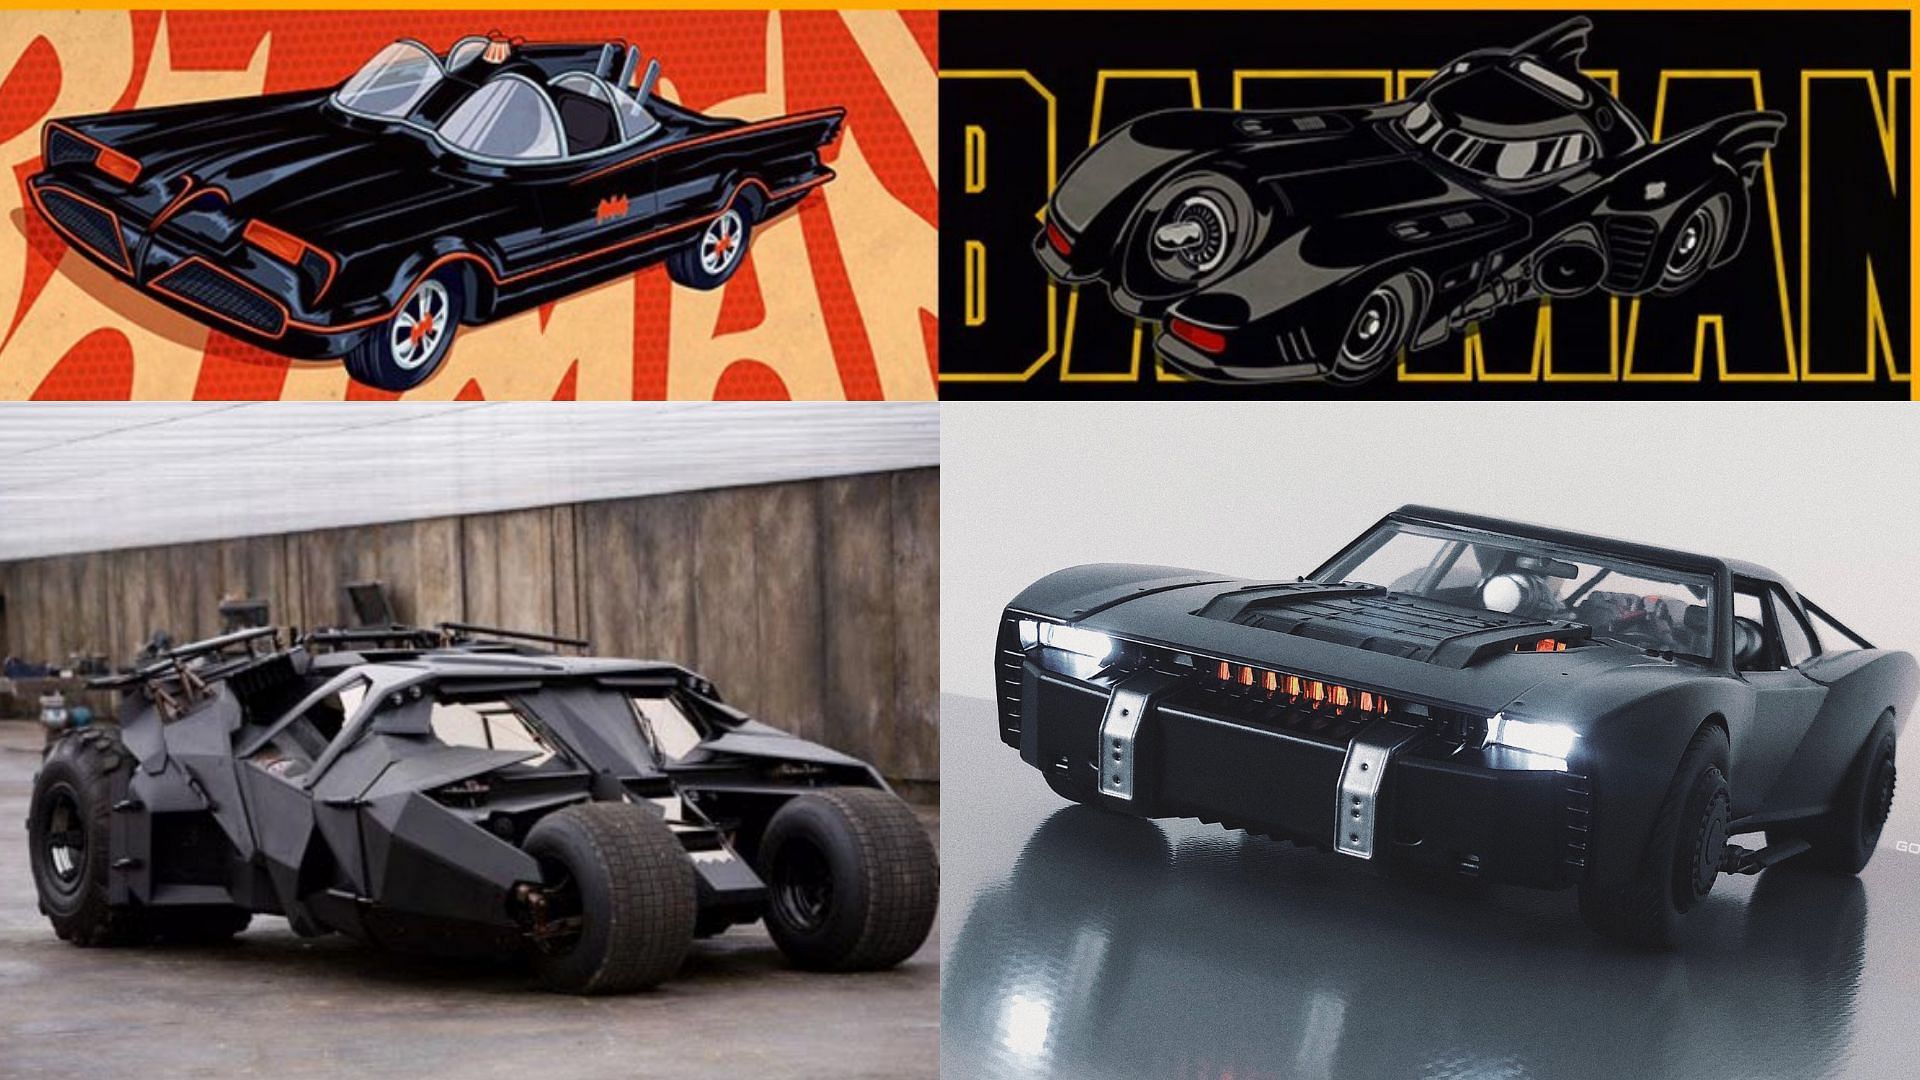 Evolution of bat mobiles #rvrsuperheroes #dc #batman #batmobile